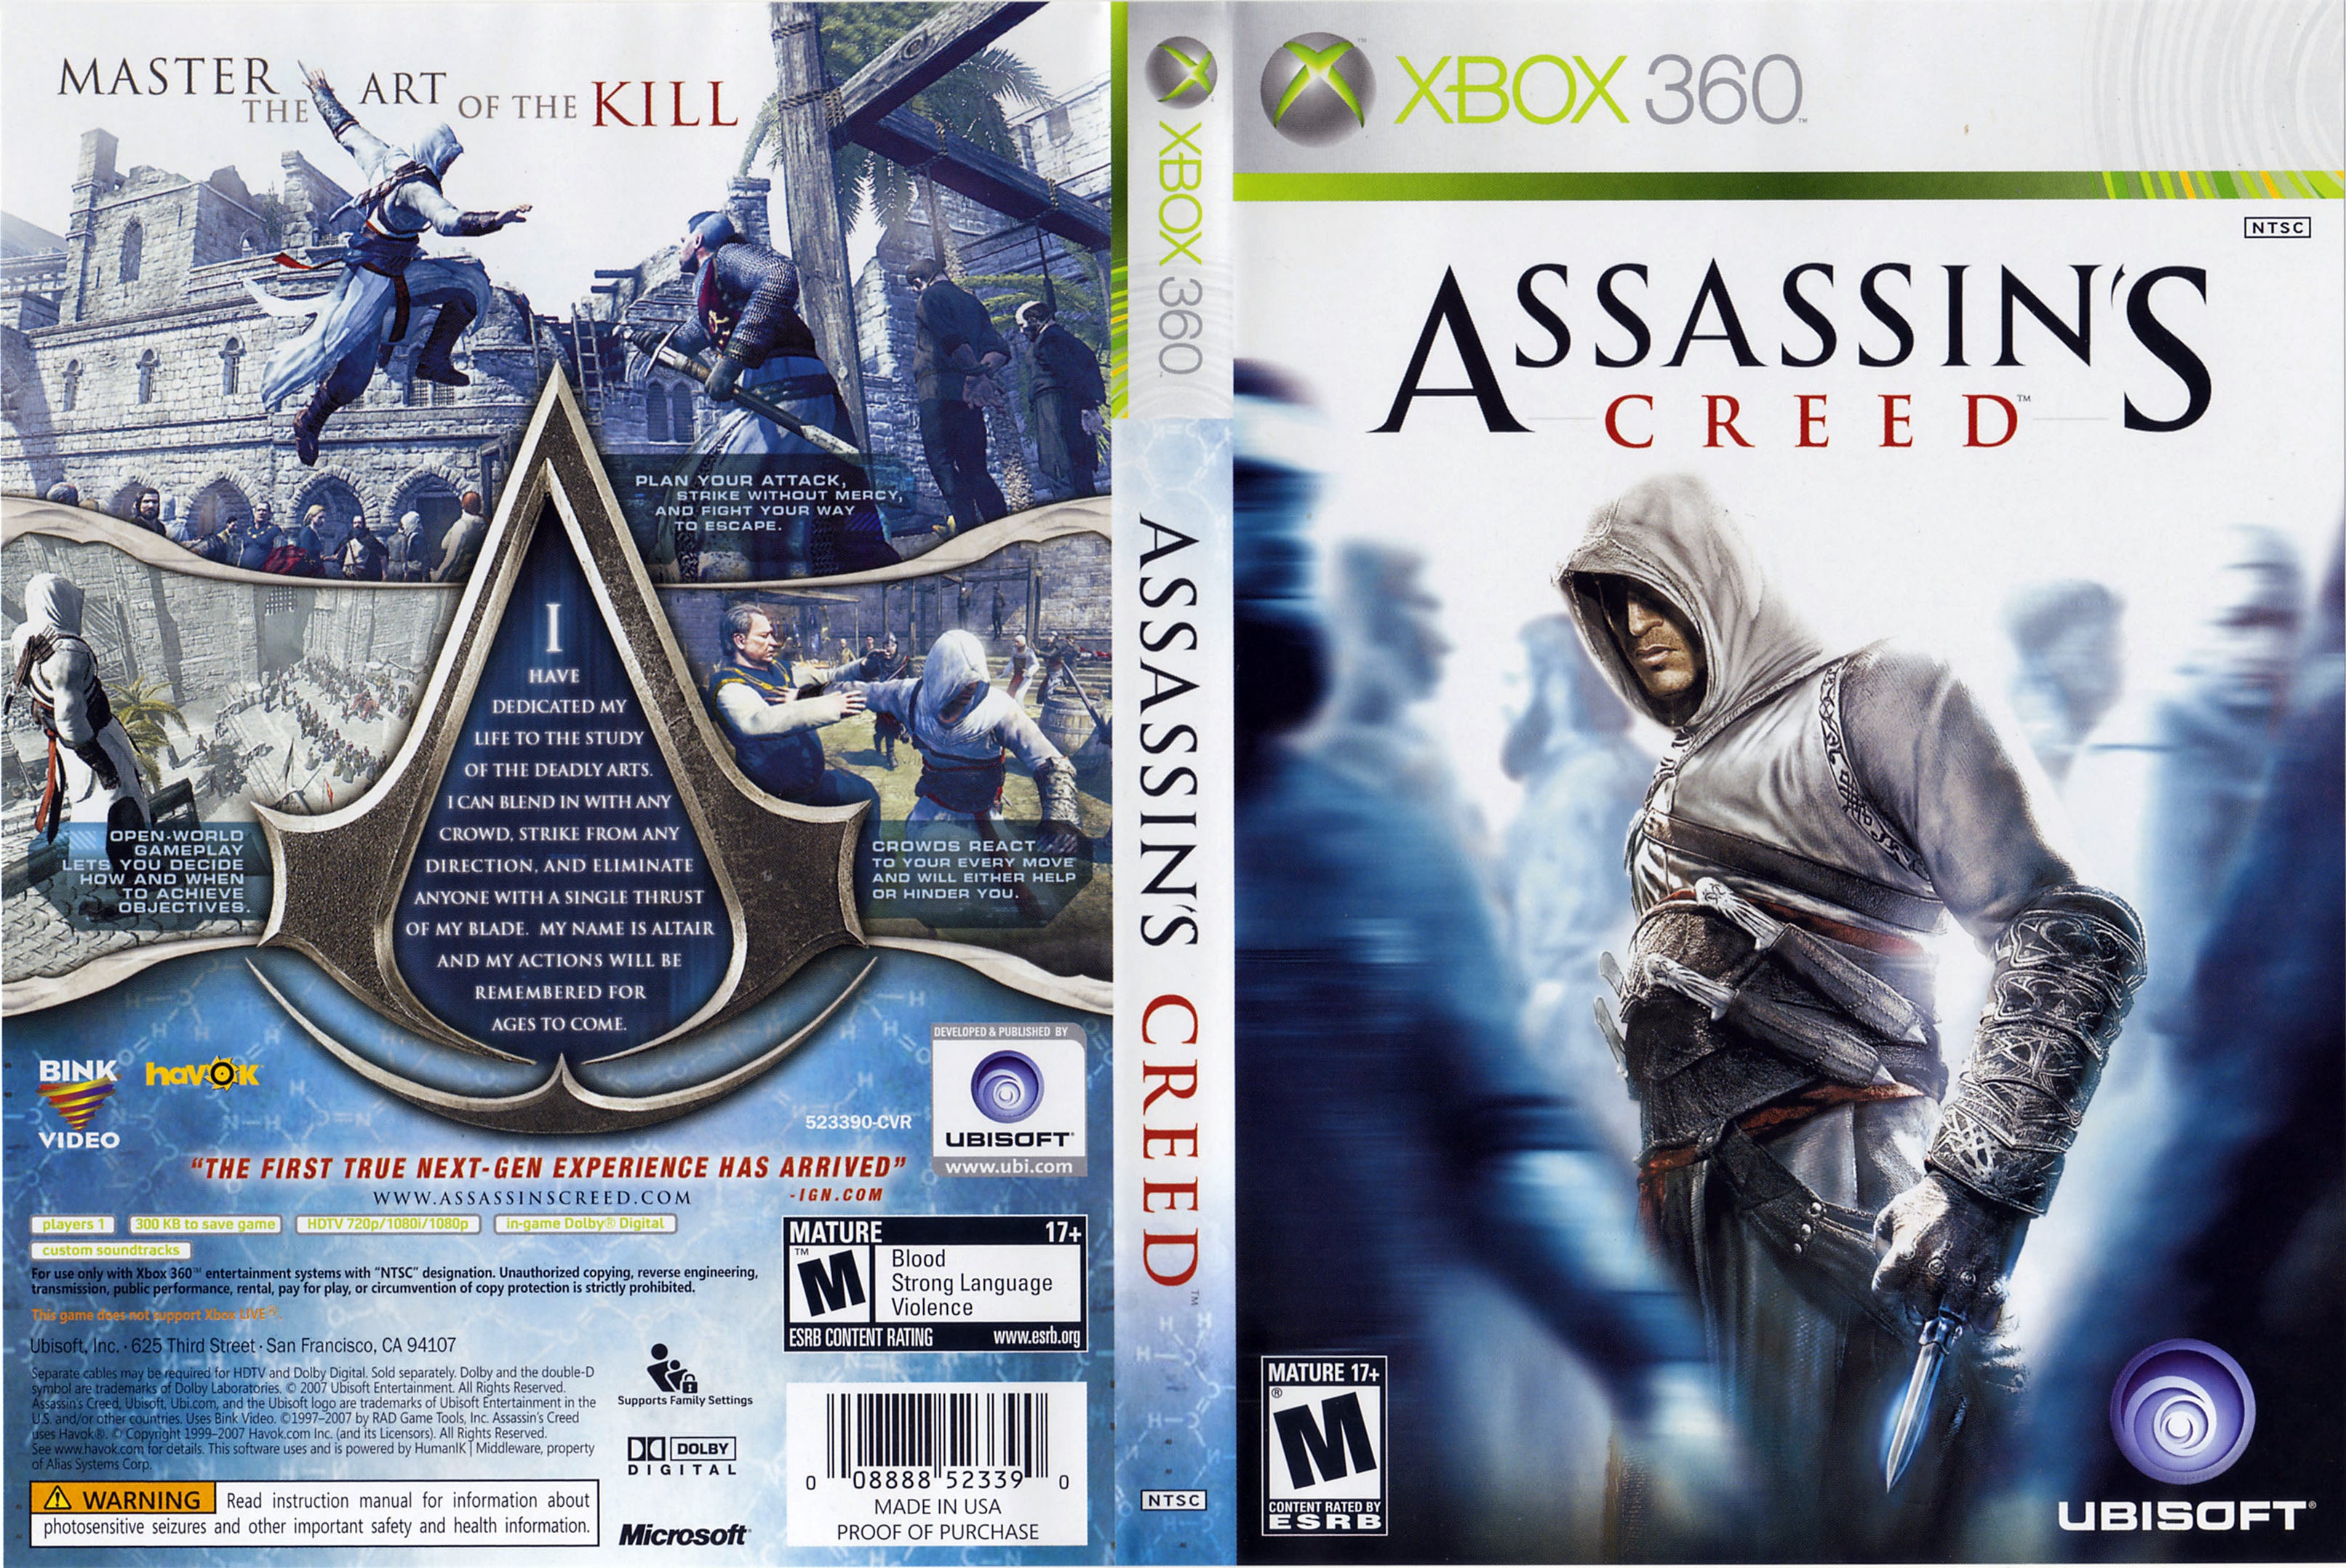 Assassin's Creed II: Platinum Hits Edition